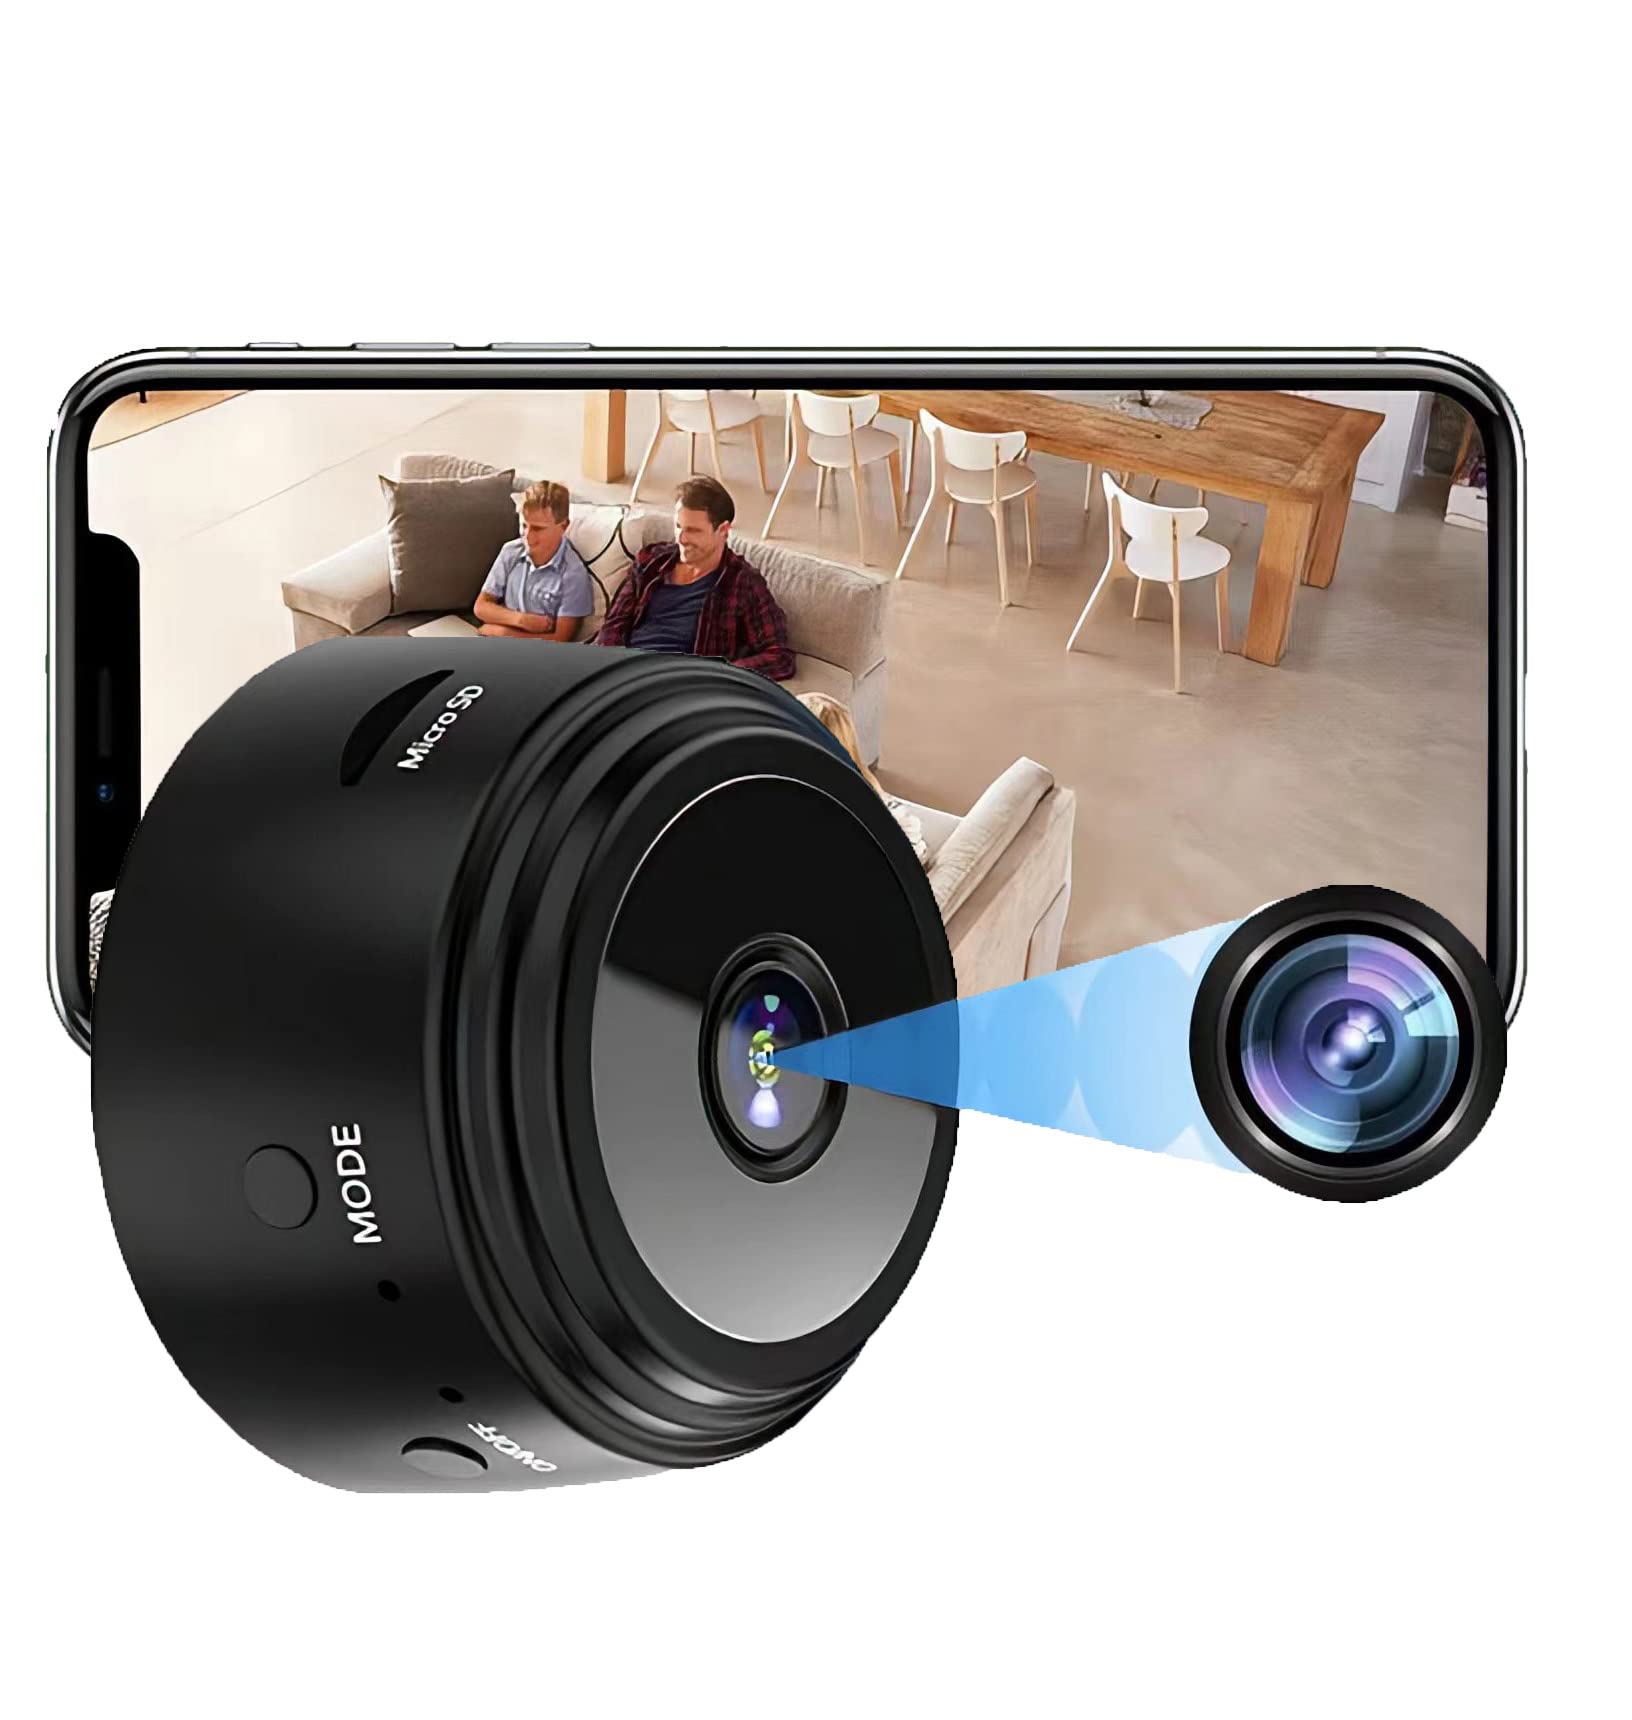 Wifi Mini Caméra